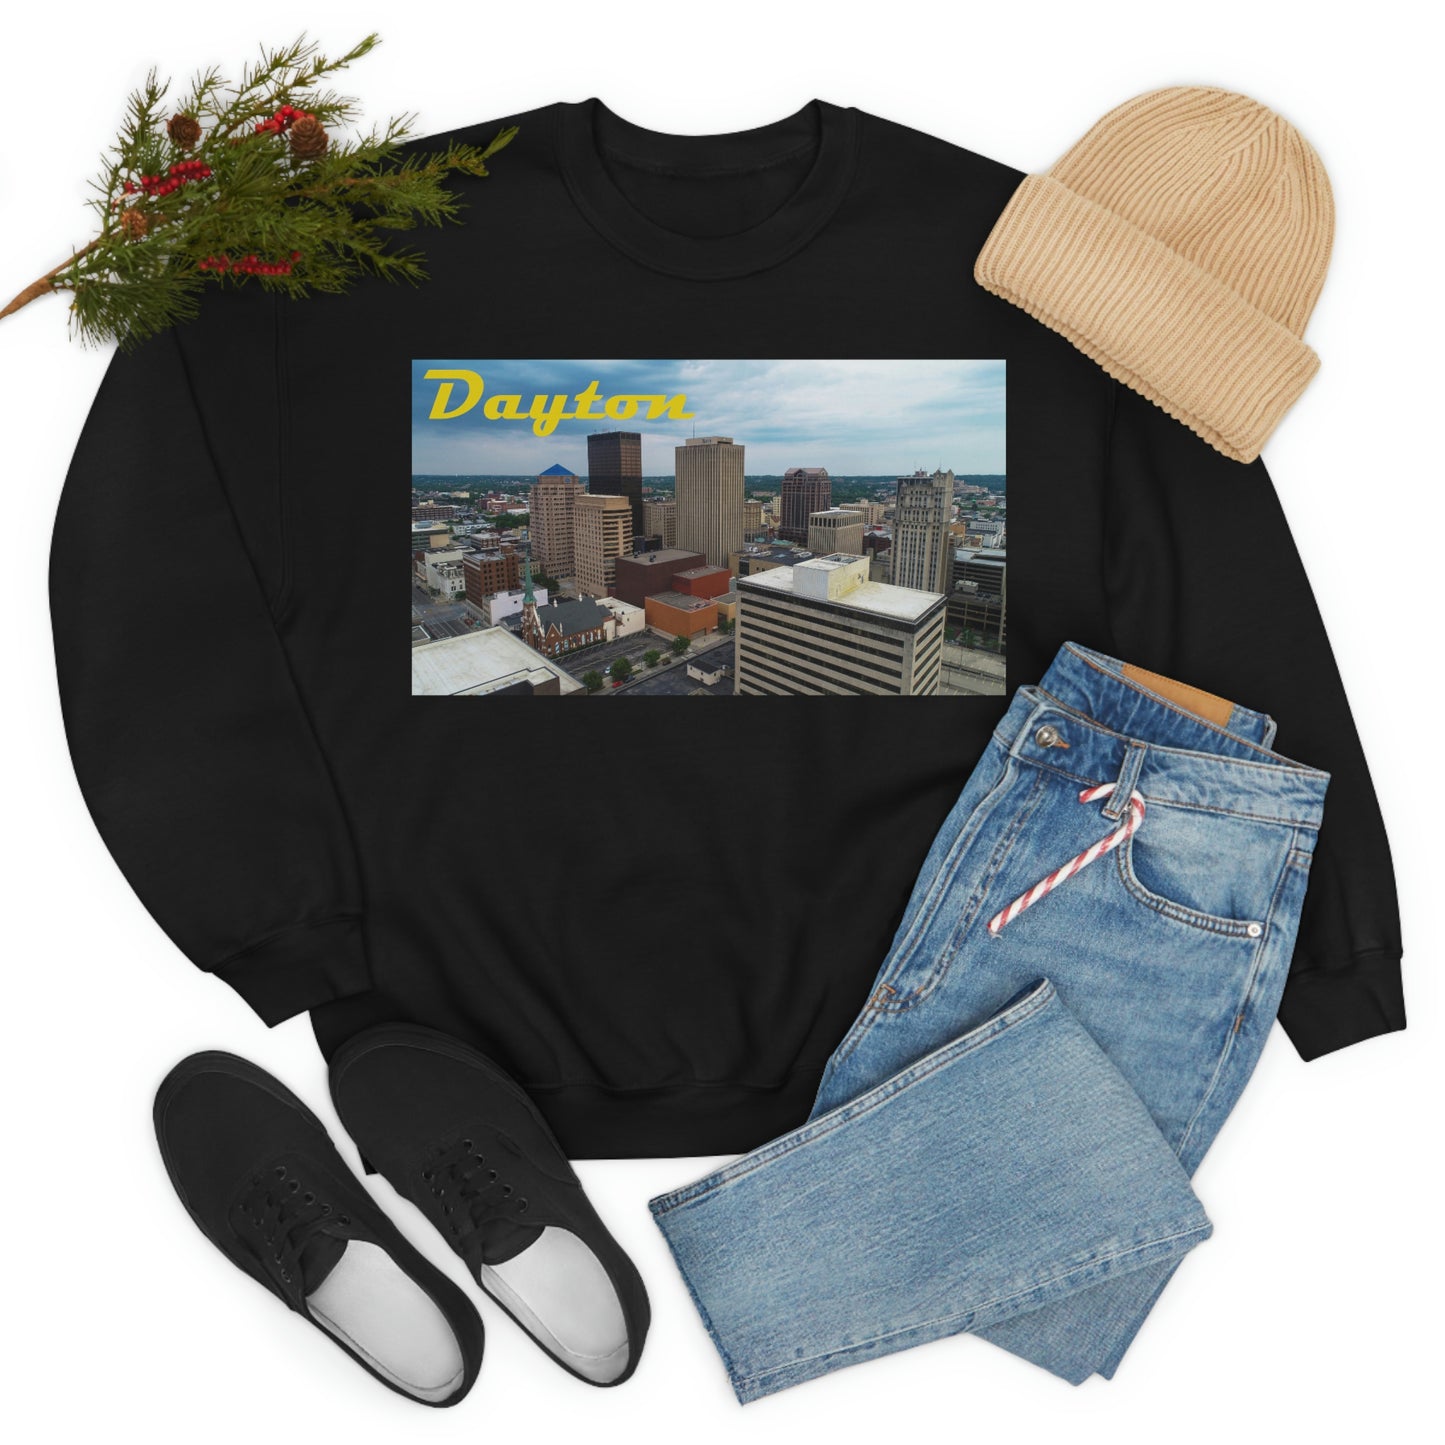 Dayton Sweatshirt